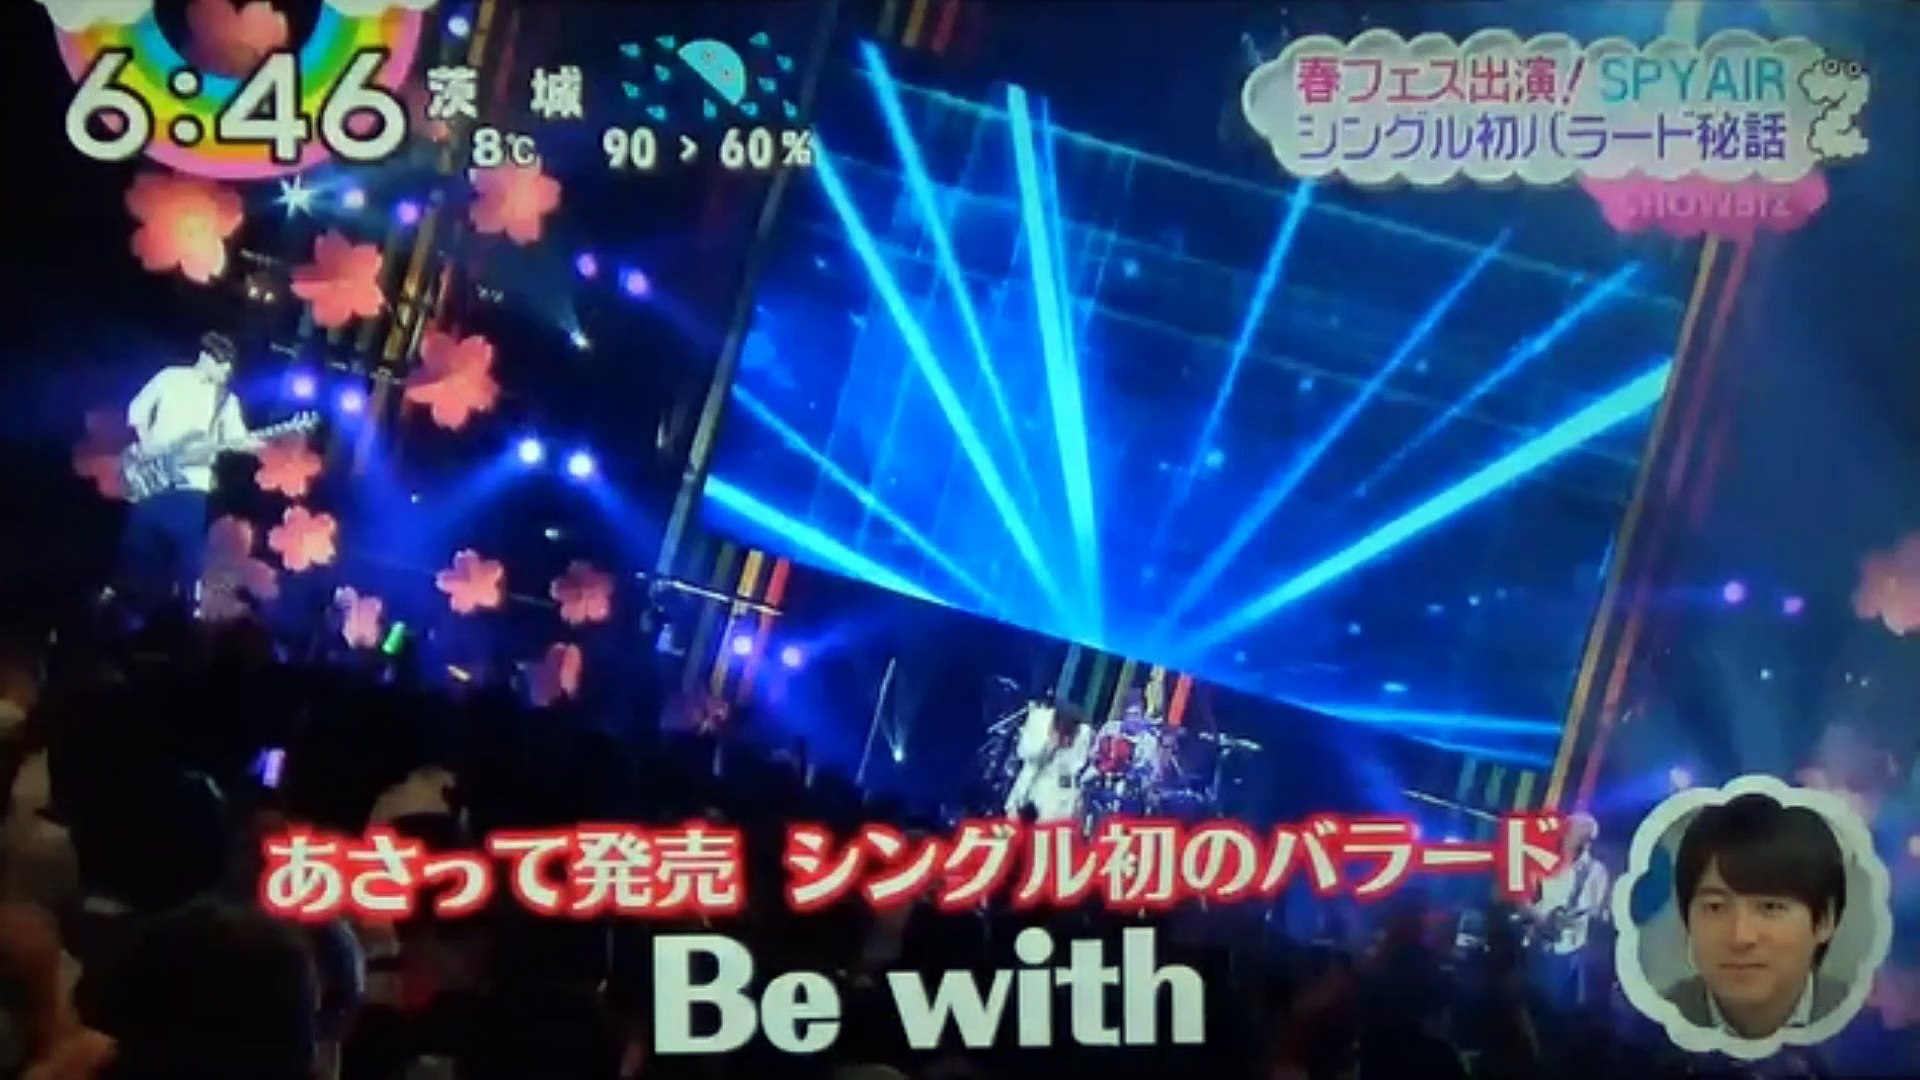 Spyair 欅坂46とコラボ 動画 Dailymotion